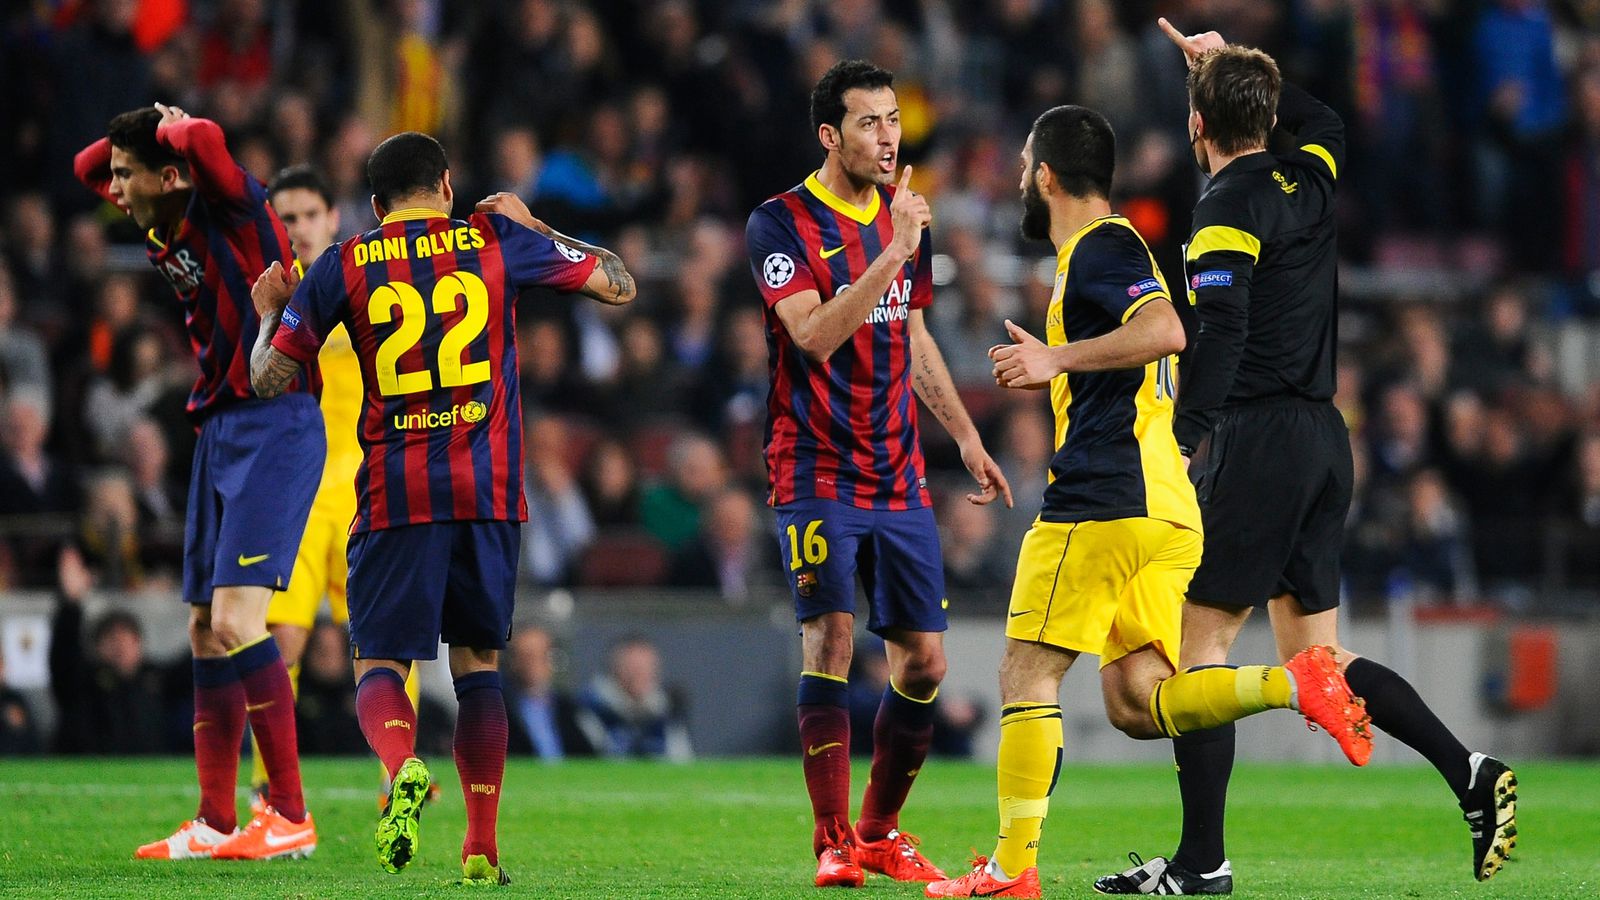 Barcelona vs. Atlético Madrid, 2014 UEFA Champions League: Atleti grab